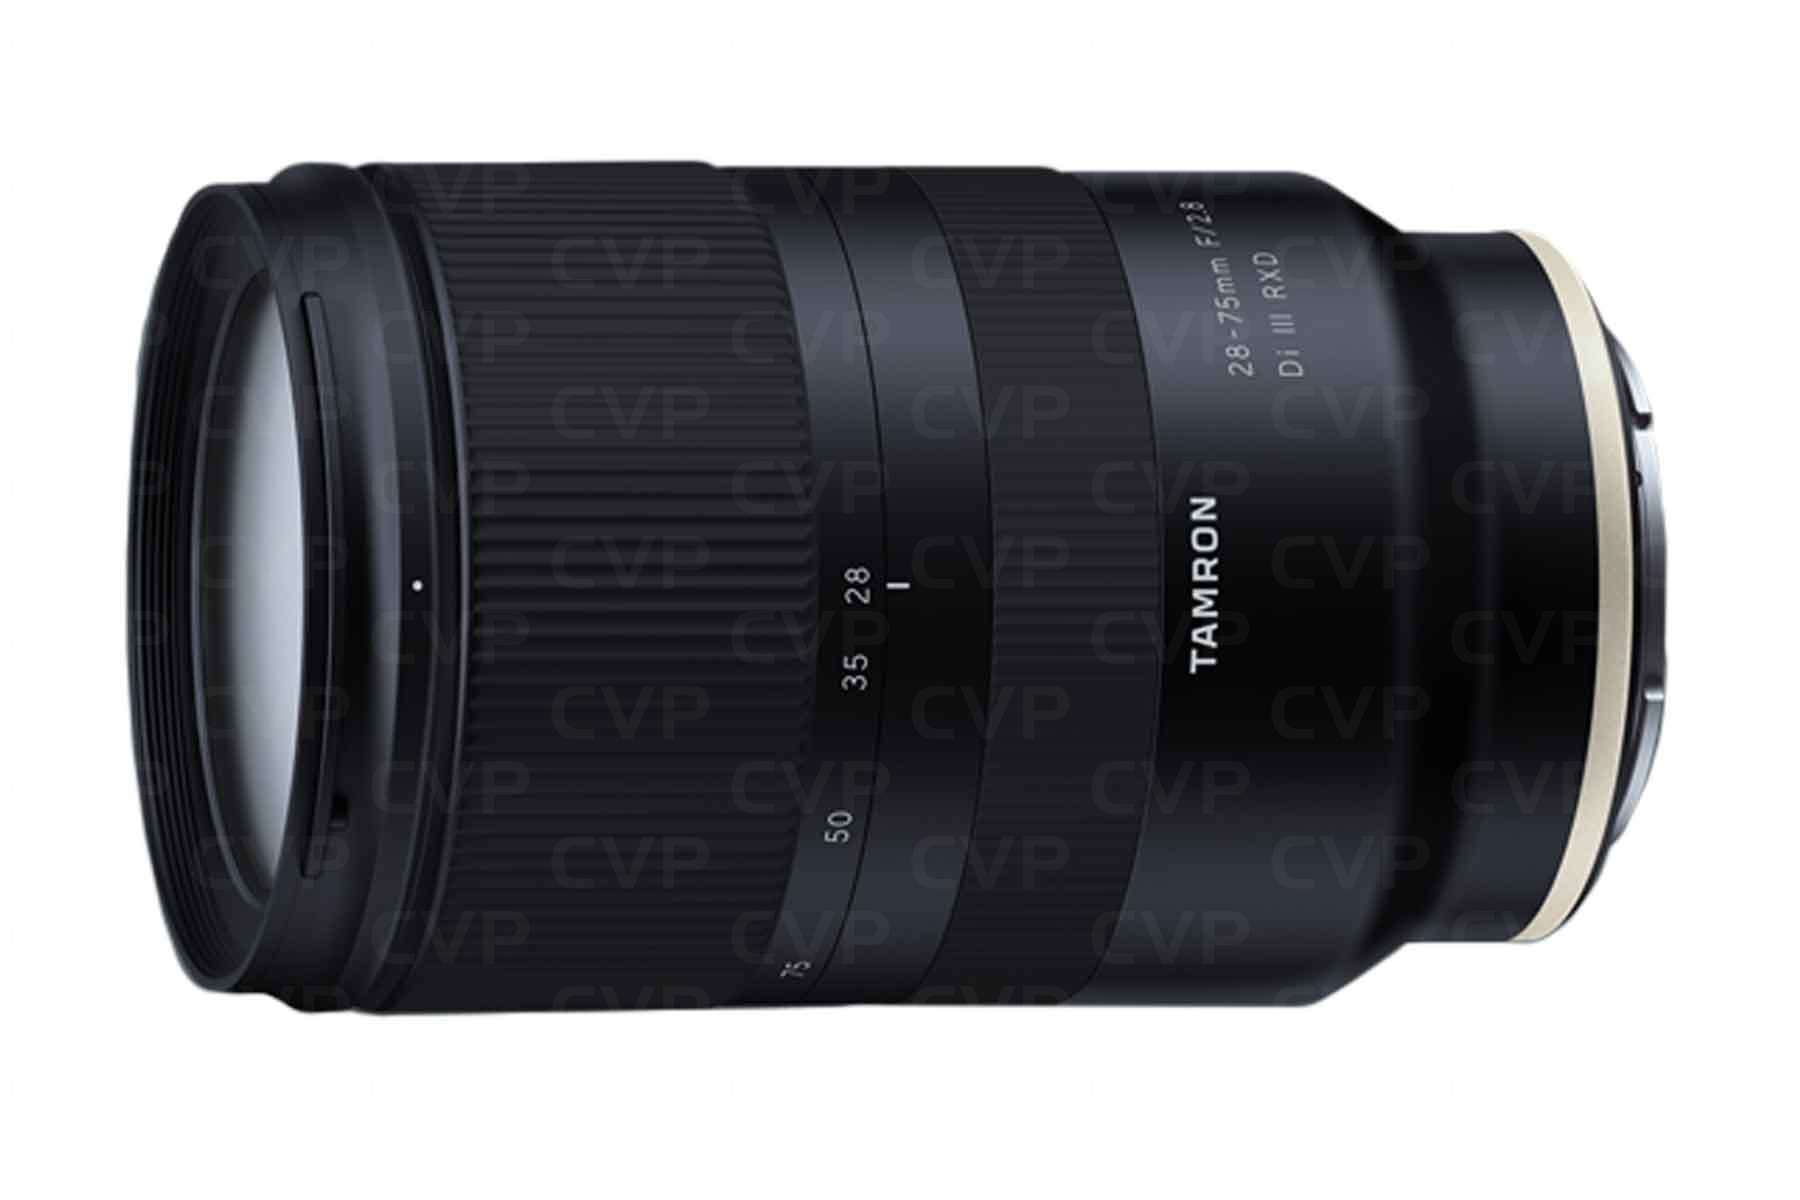 Buy - Tamron 28-75mm F/2.8 Di III RXD Lens - Sony E Mount (5432)